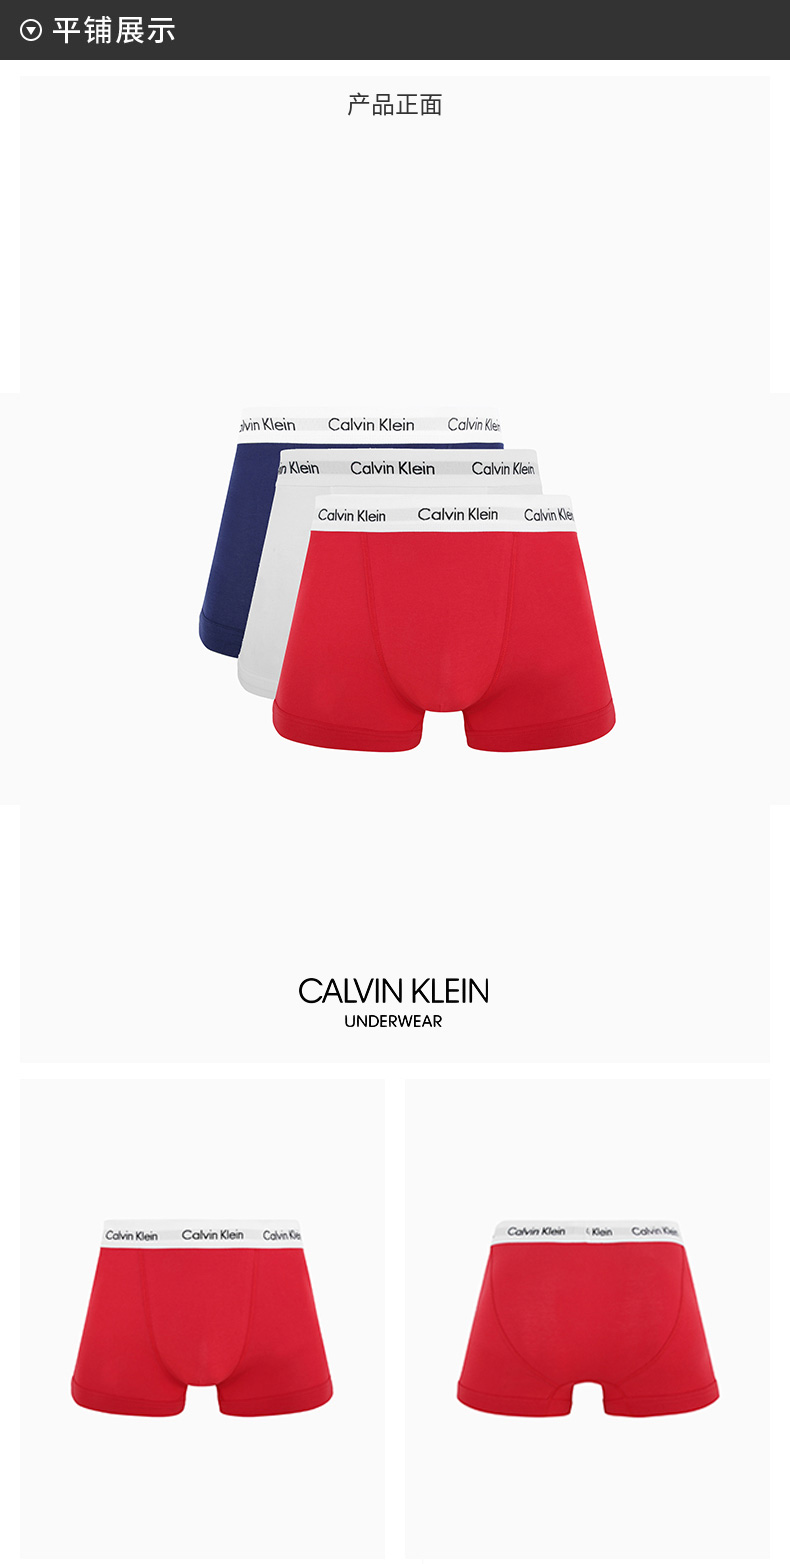 CK内裤广告图片